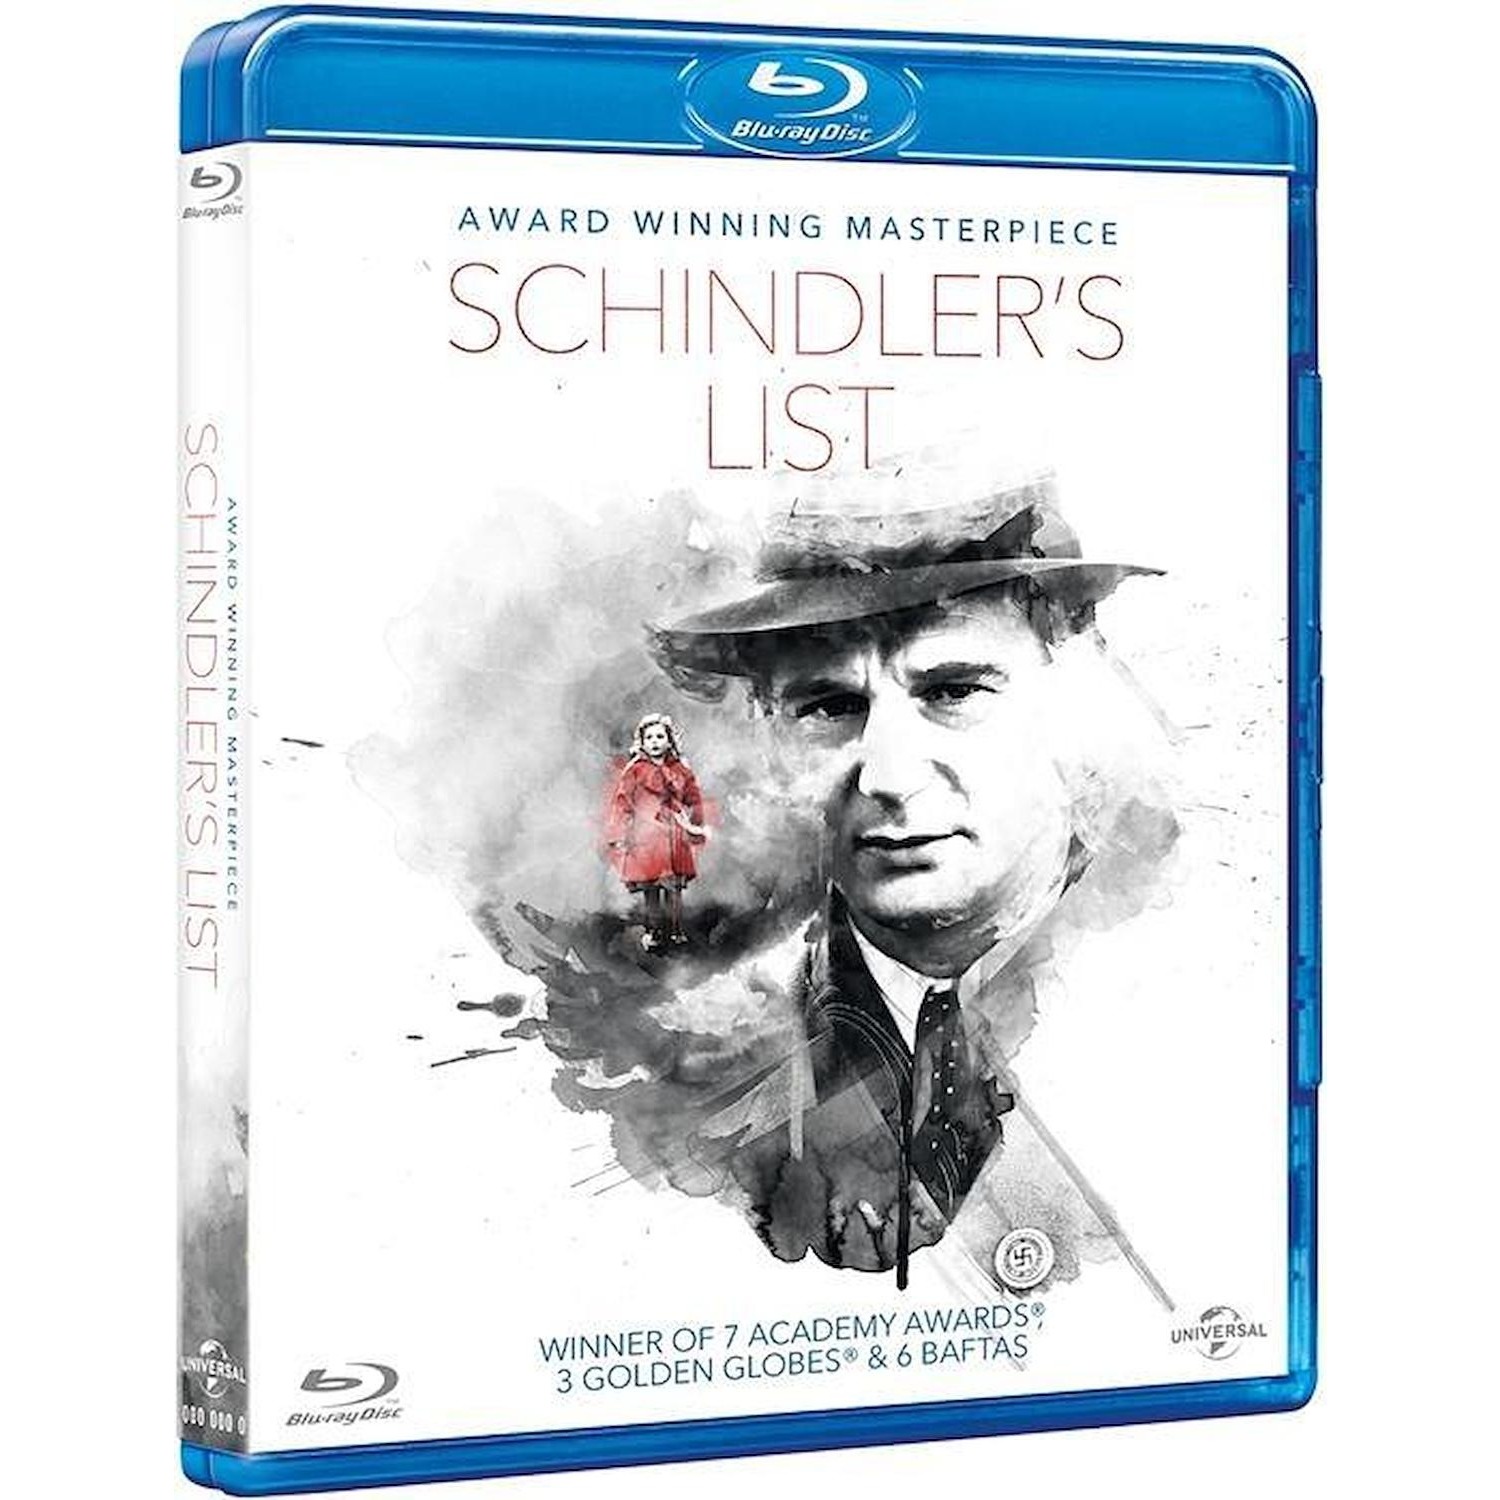 Immagine per Blu-ray Schindler's List da DIMOStore